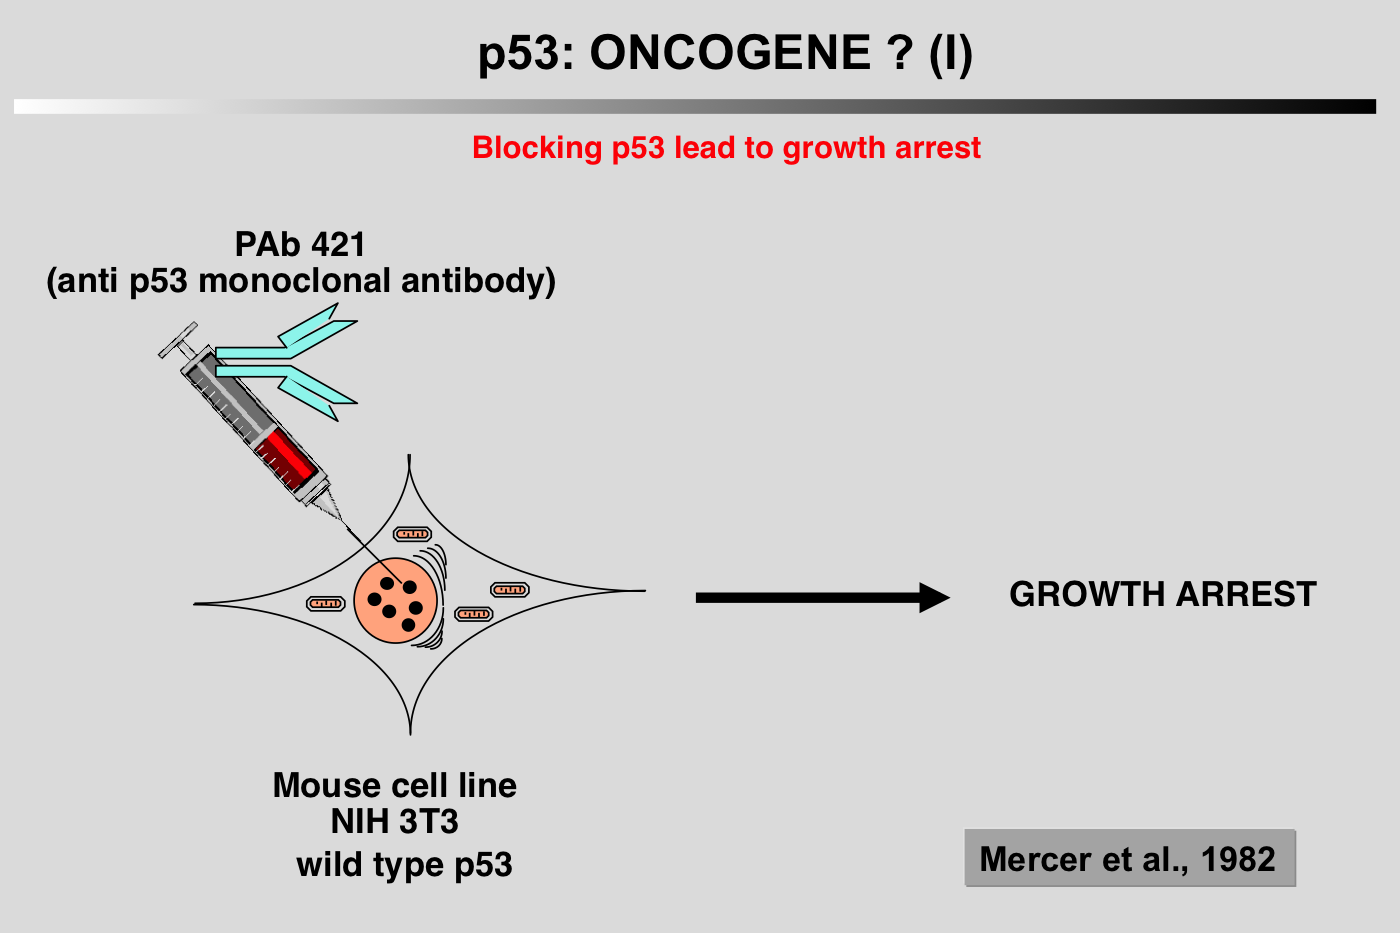 p53 as an oncogene?